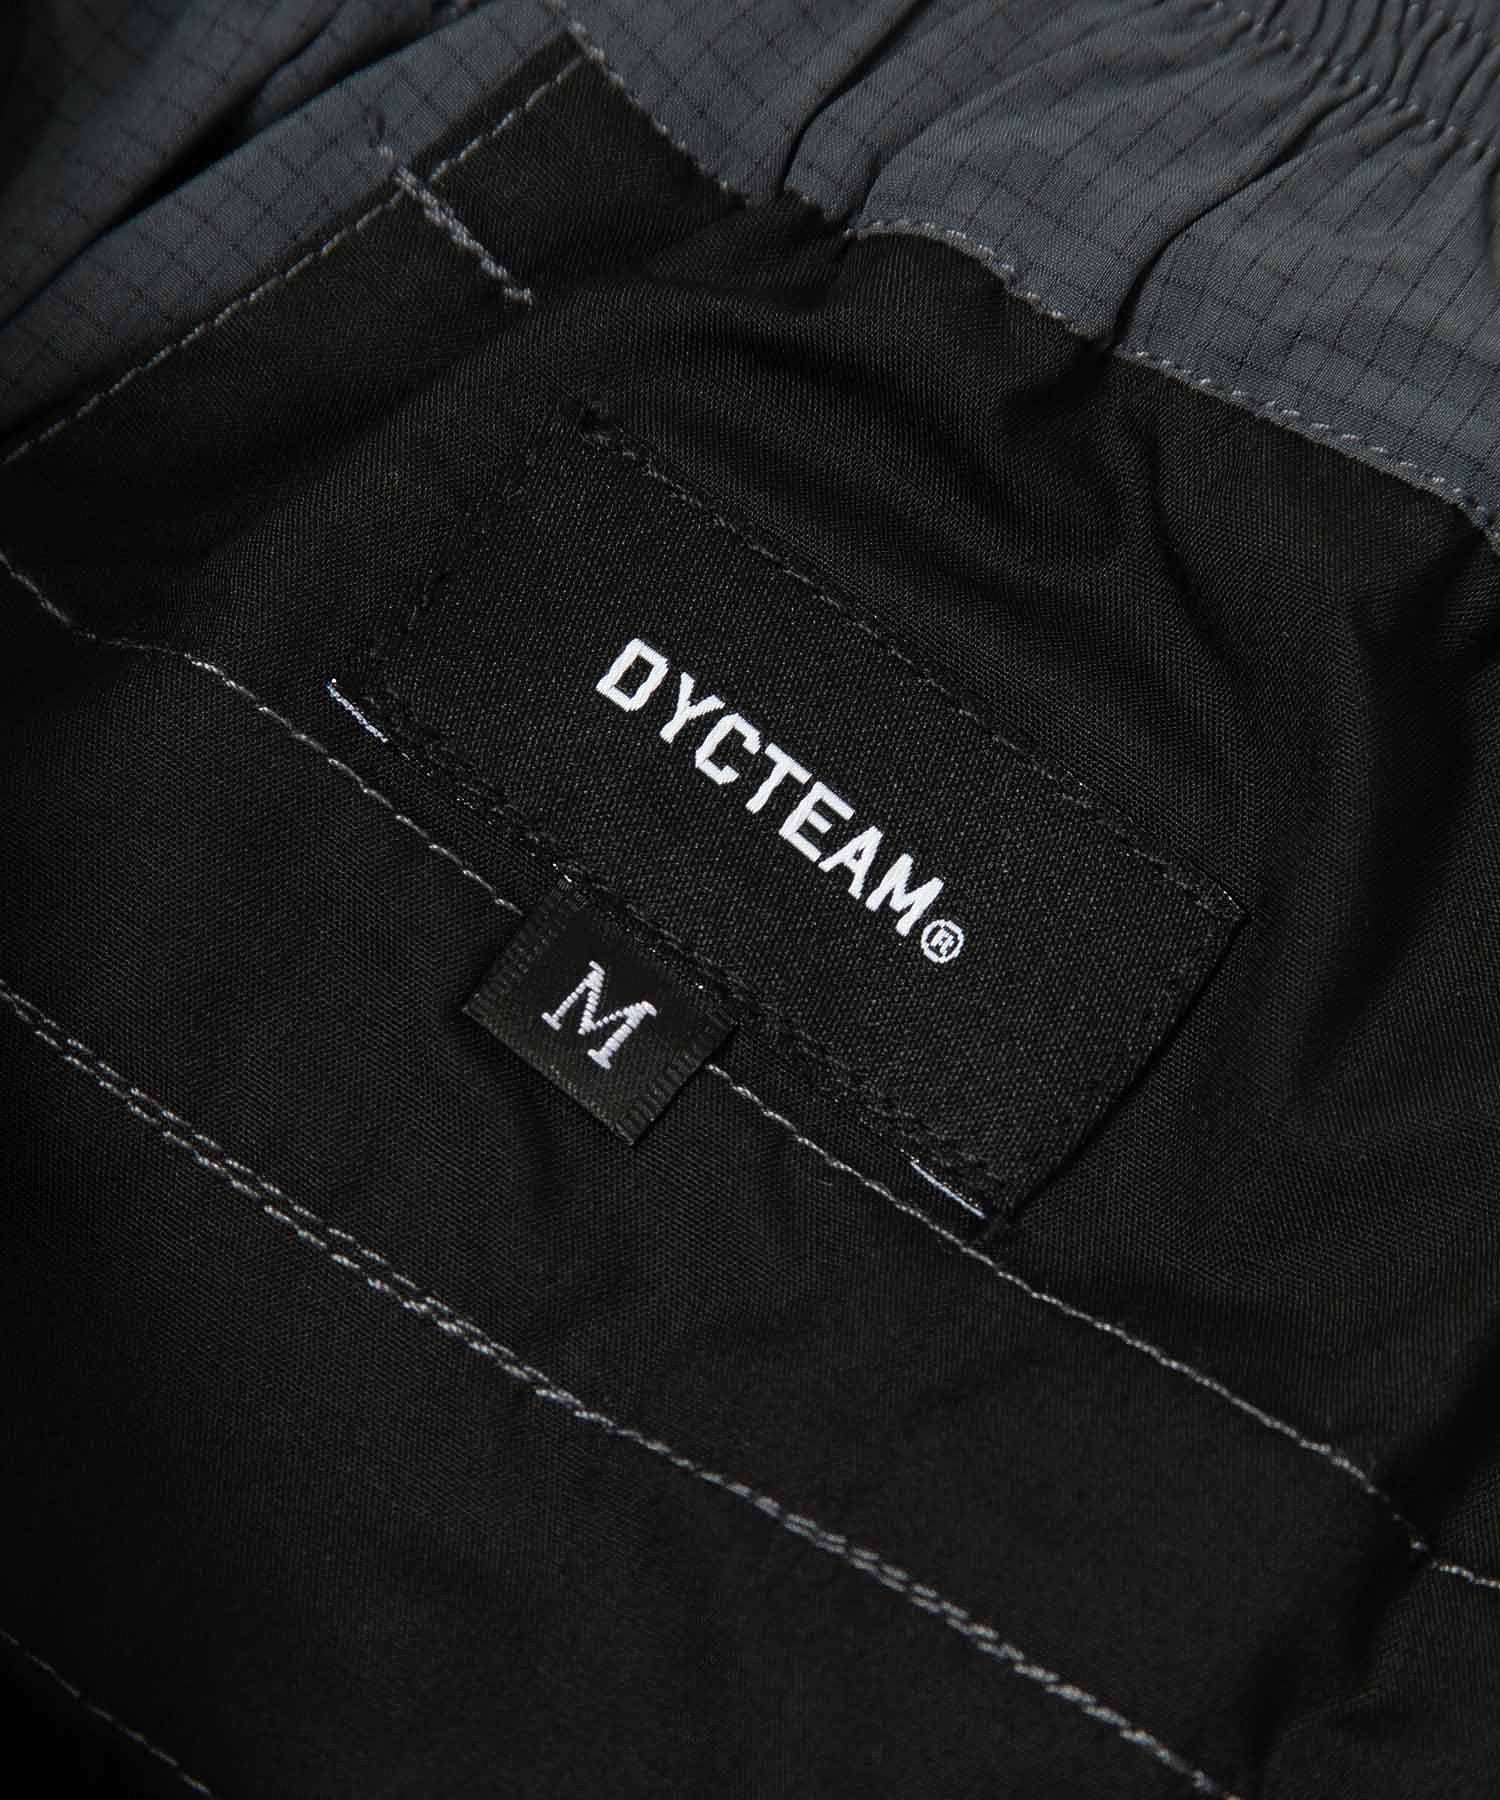 DYCTEAM /ディーワイシーチーム/ See-through LF pocket S-pants DSP-B-2205-GY